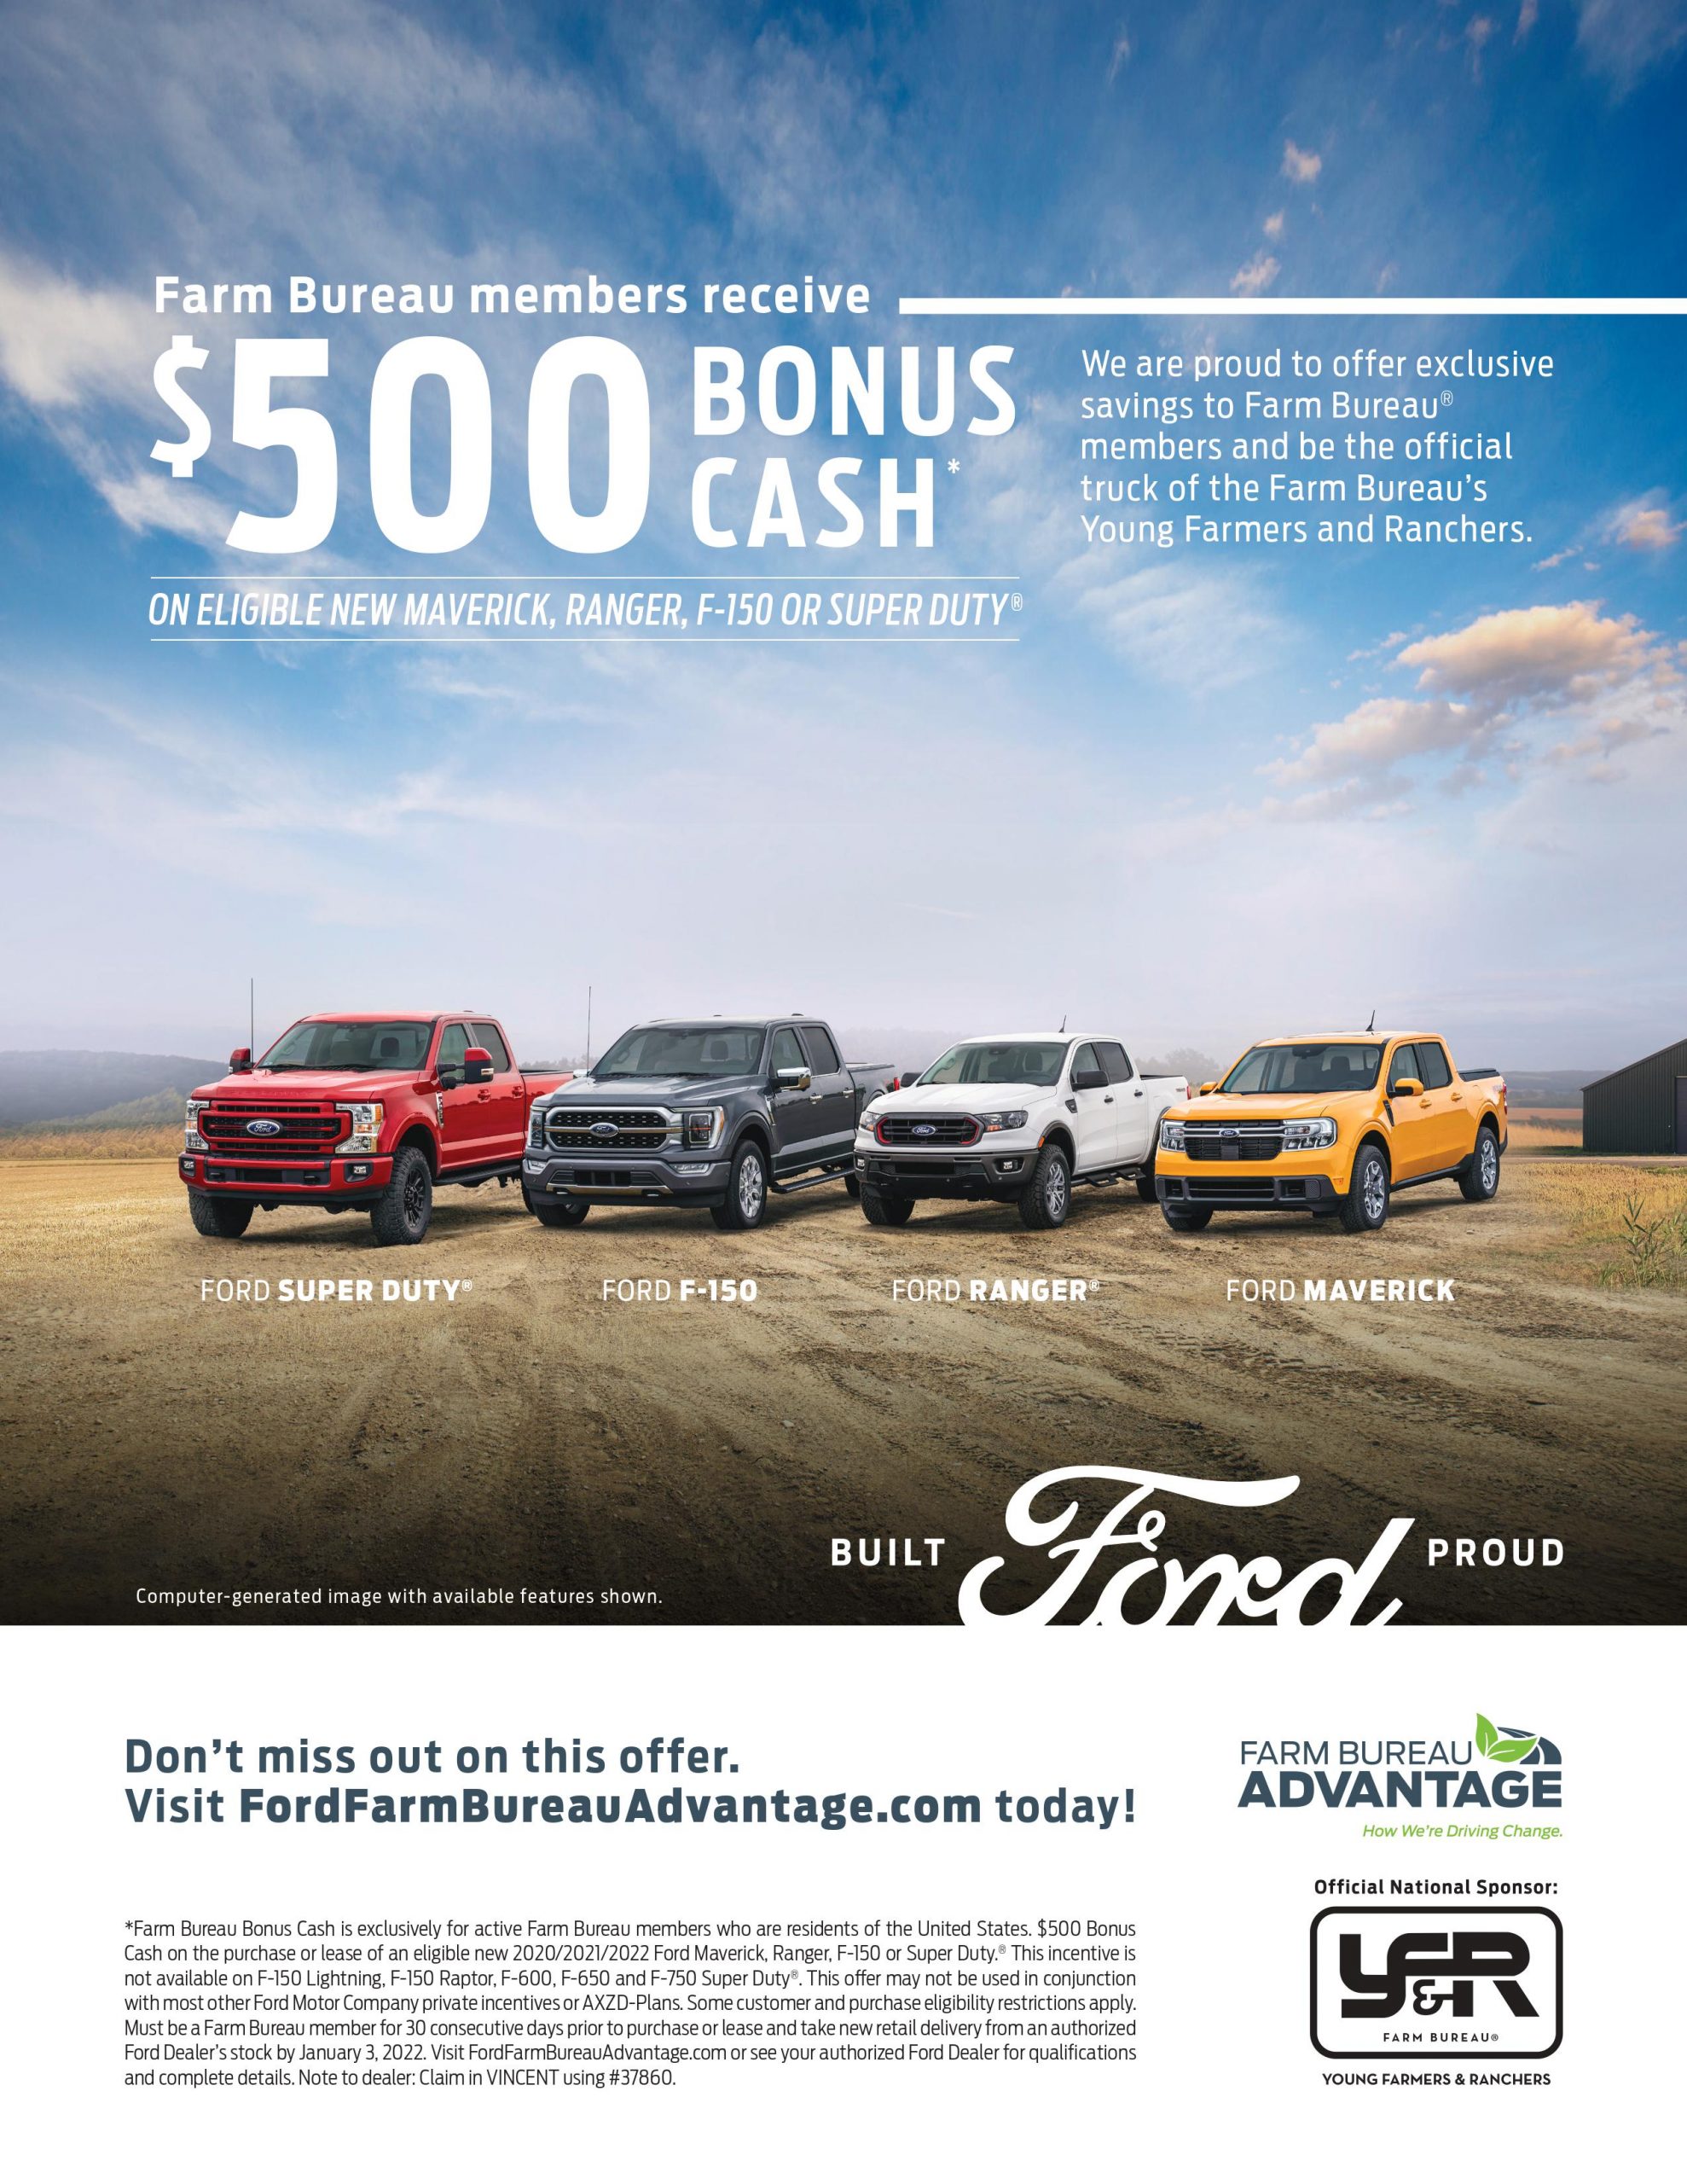 Ford 500 Bonus Cash Rhode Island Farm Bureau